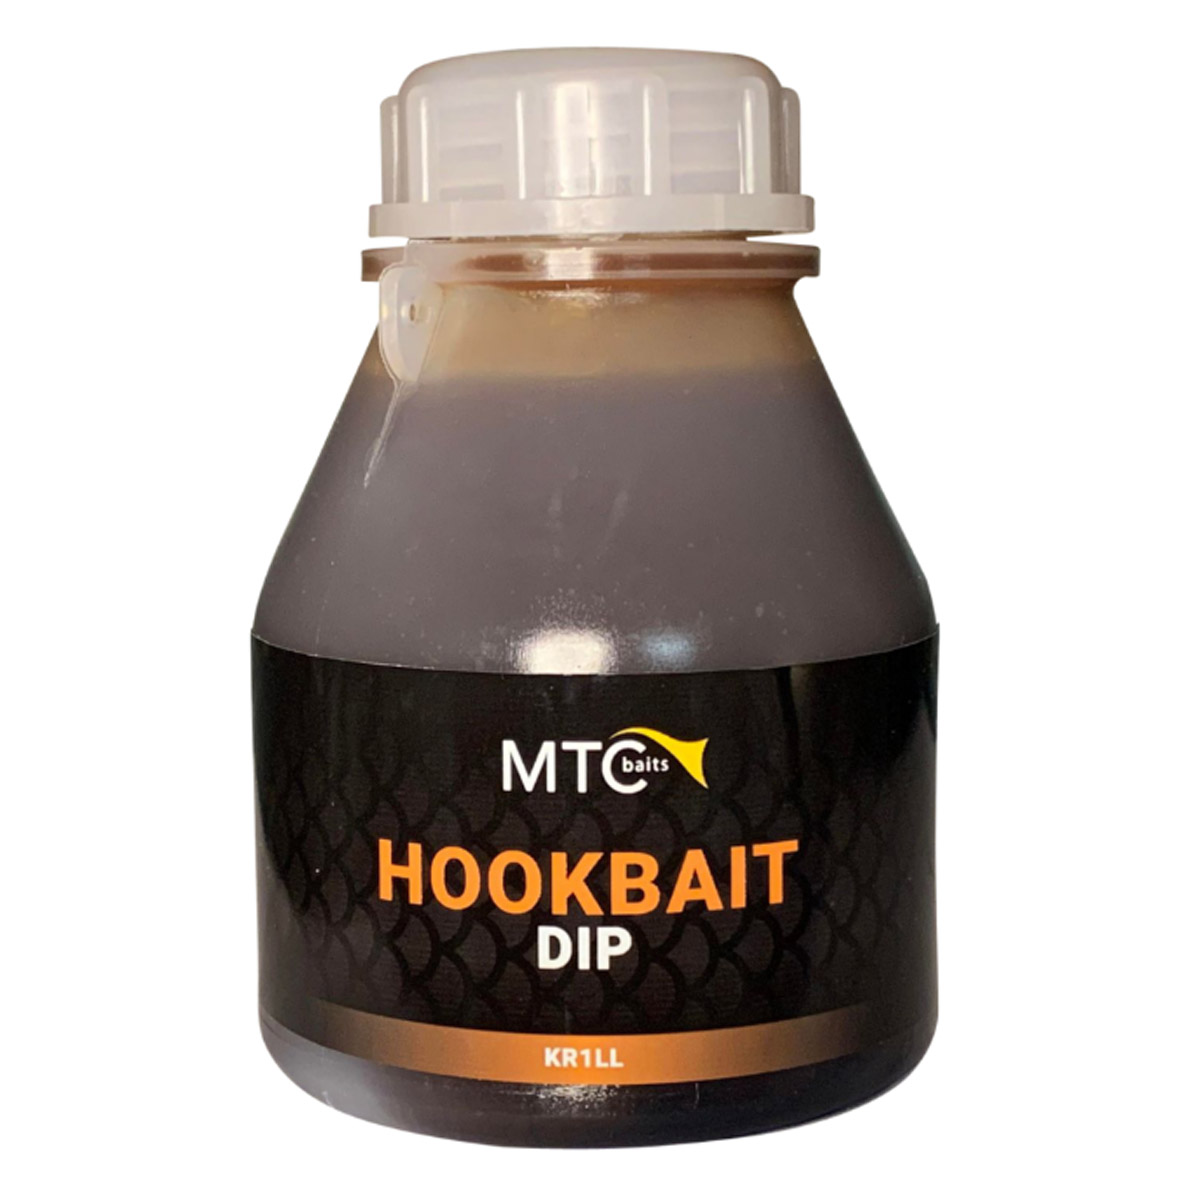 MTC Baits Hookbait Dip KR1LL 250 ML